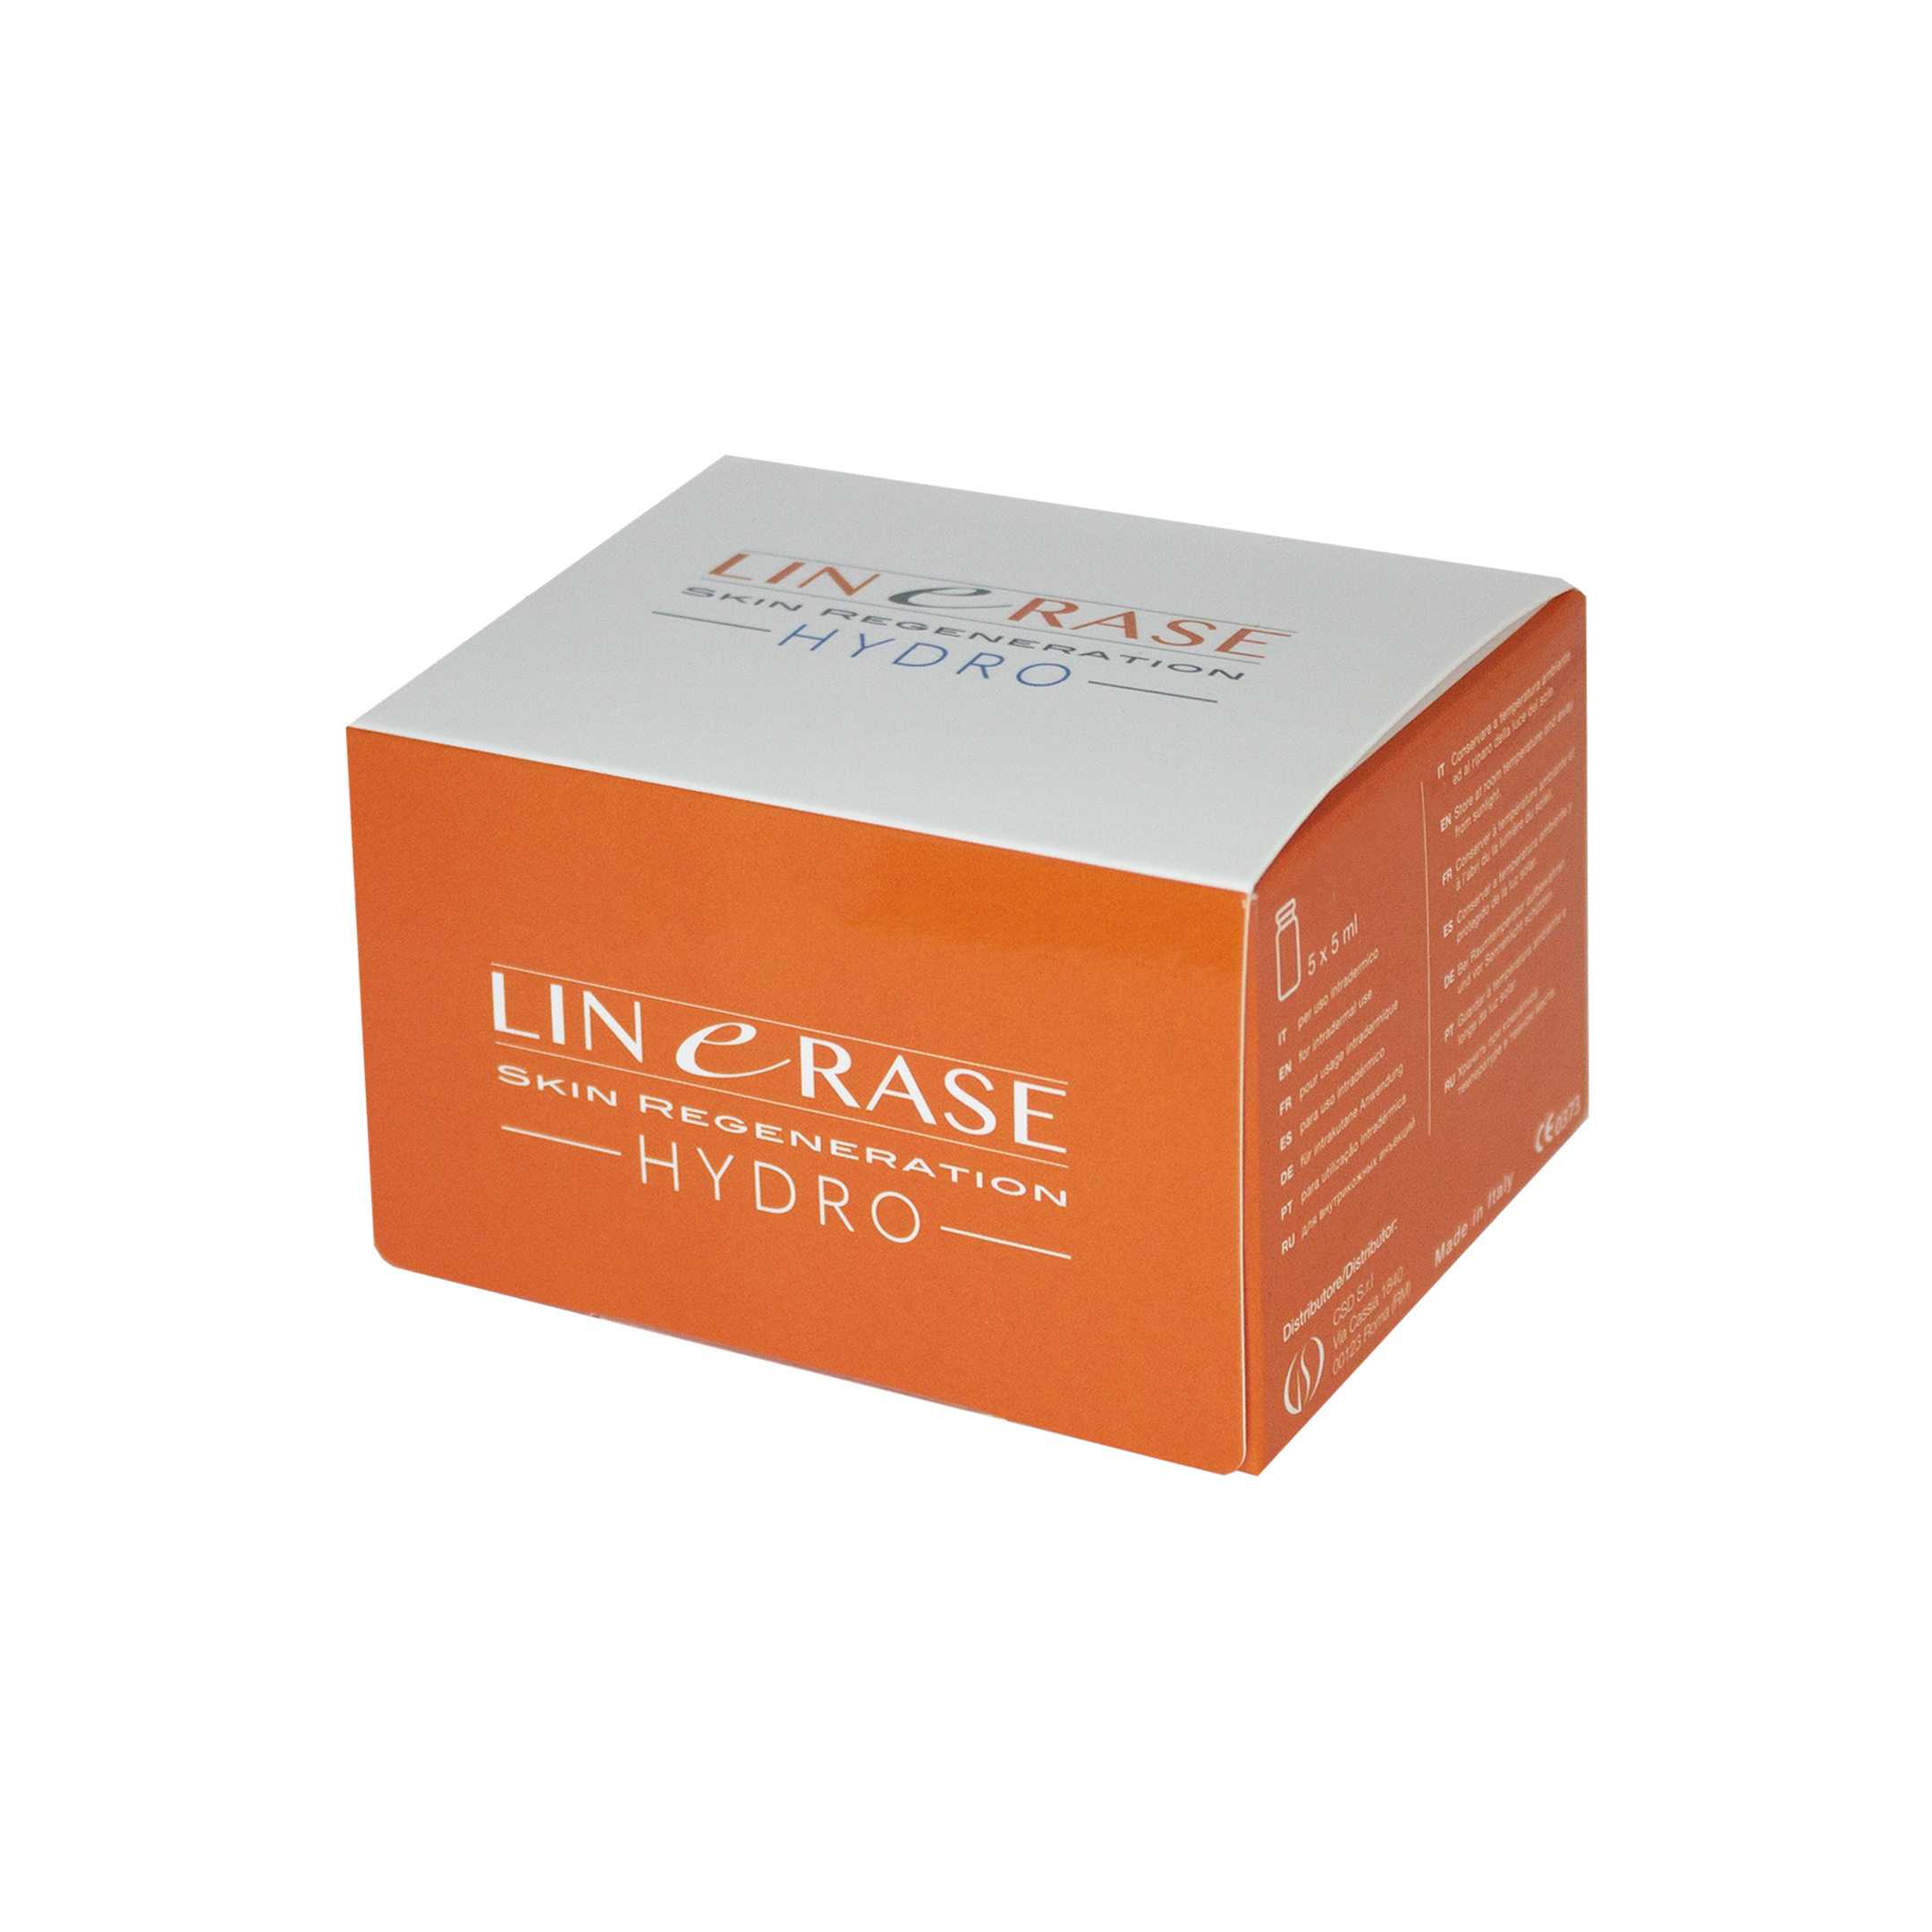 Linerase Skin Regeneration Hydro Side